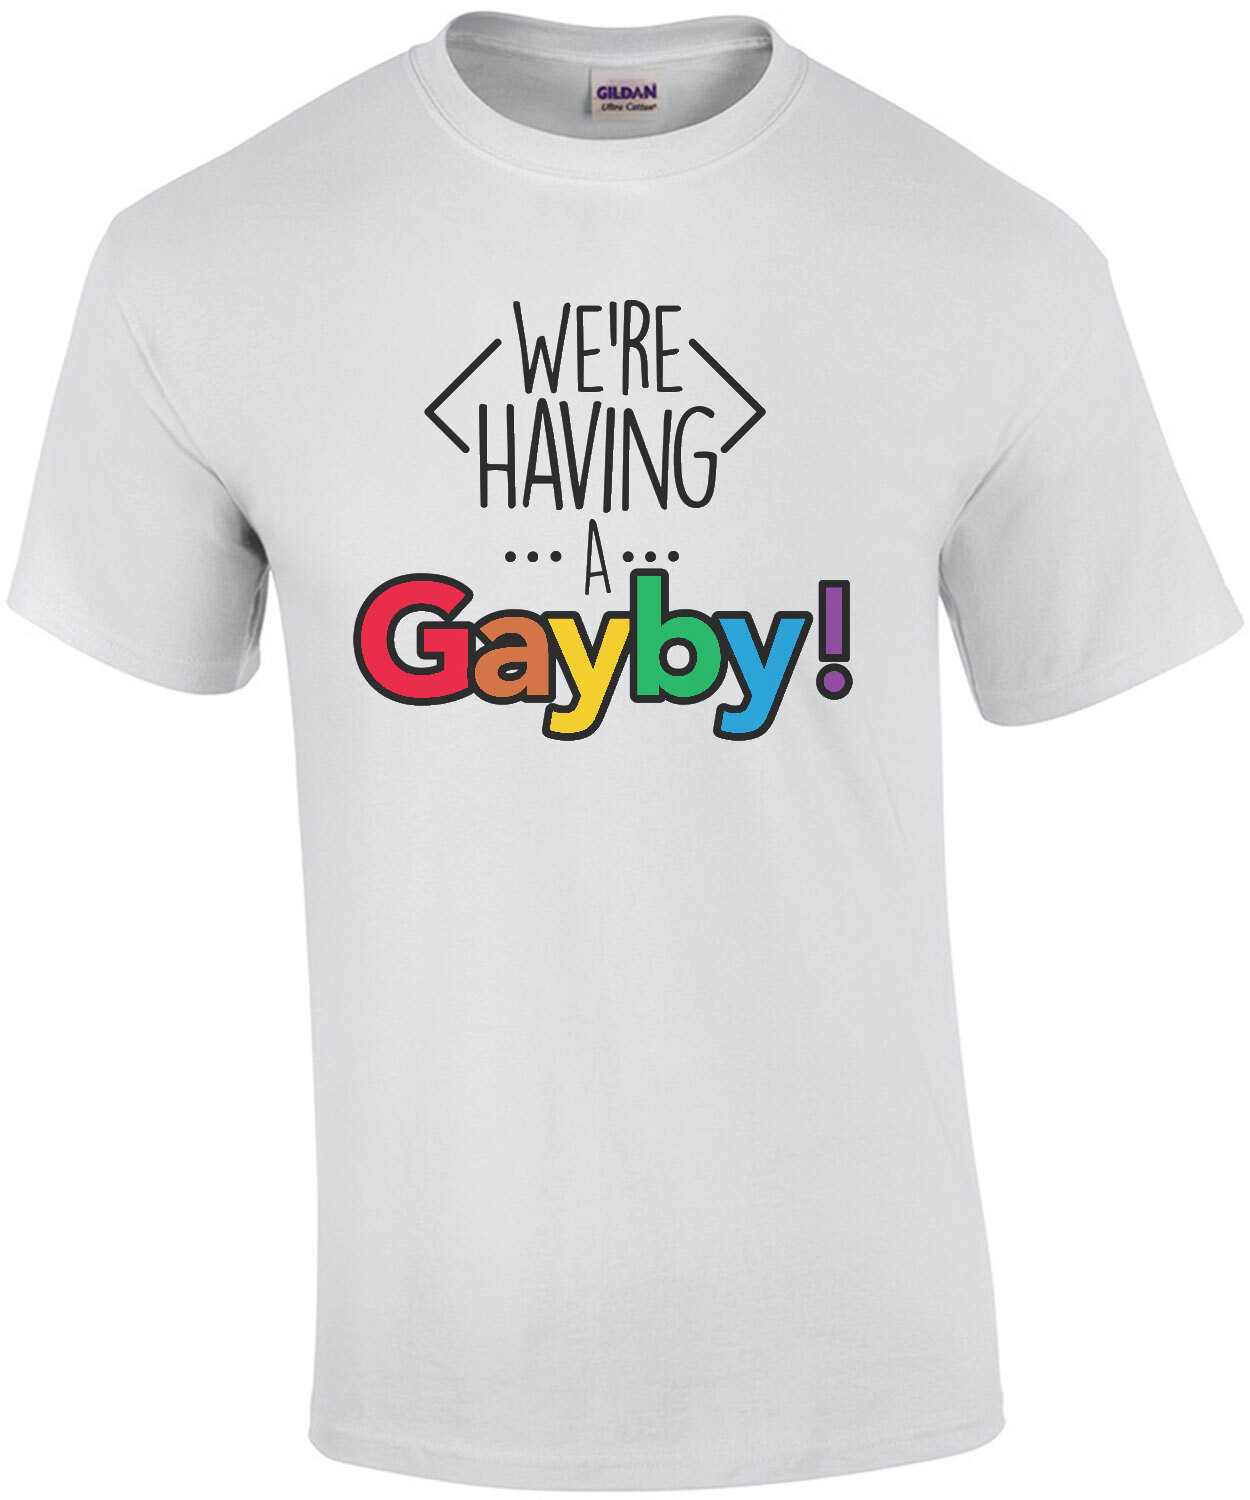 We've having a gayby! Funny gay pride t-shirt - lgbtq t-shirt